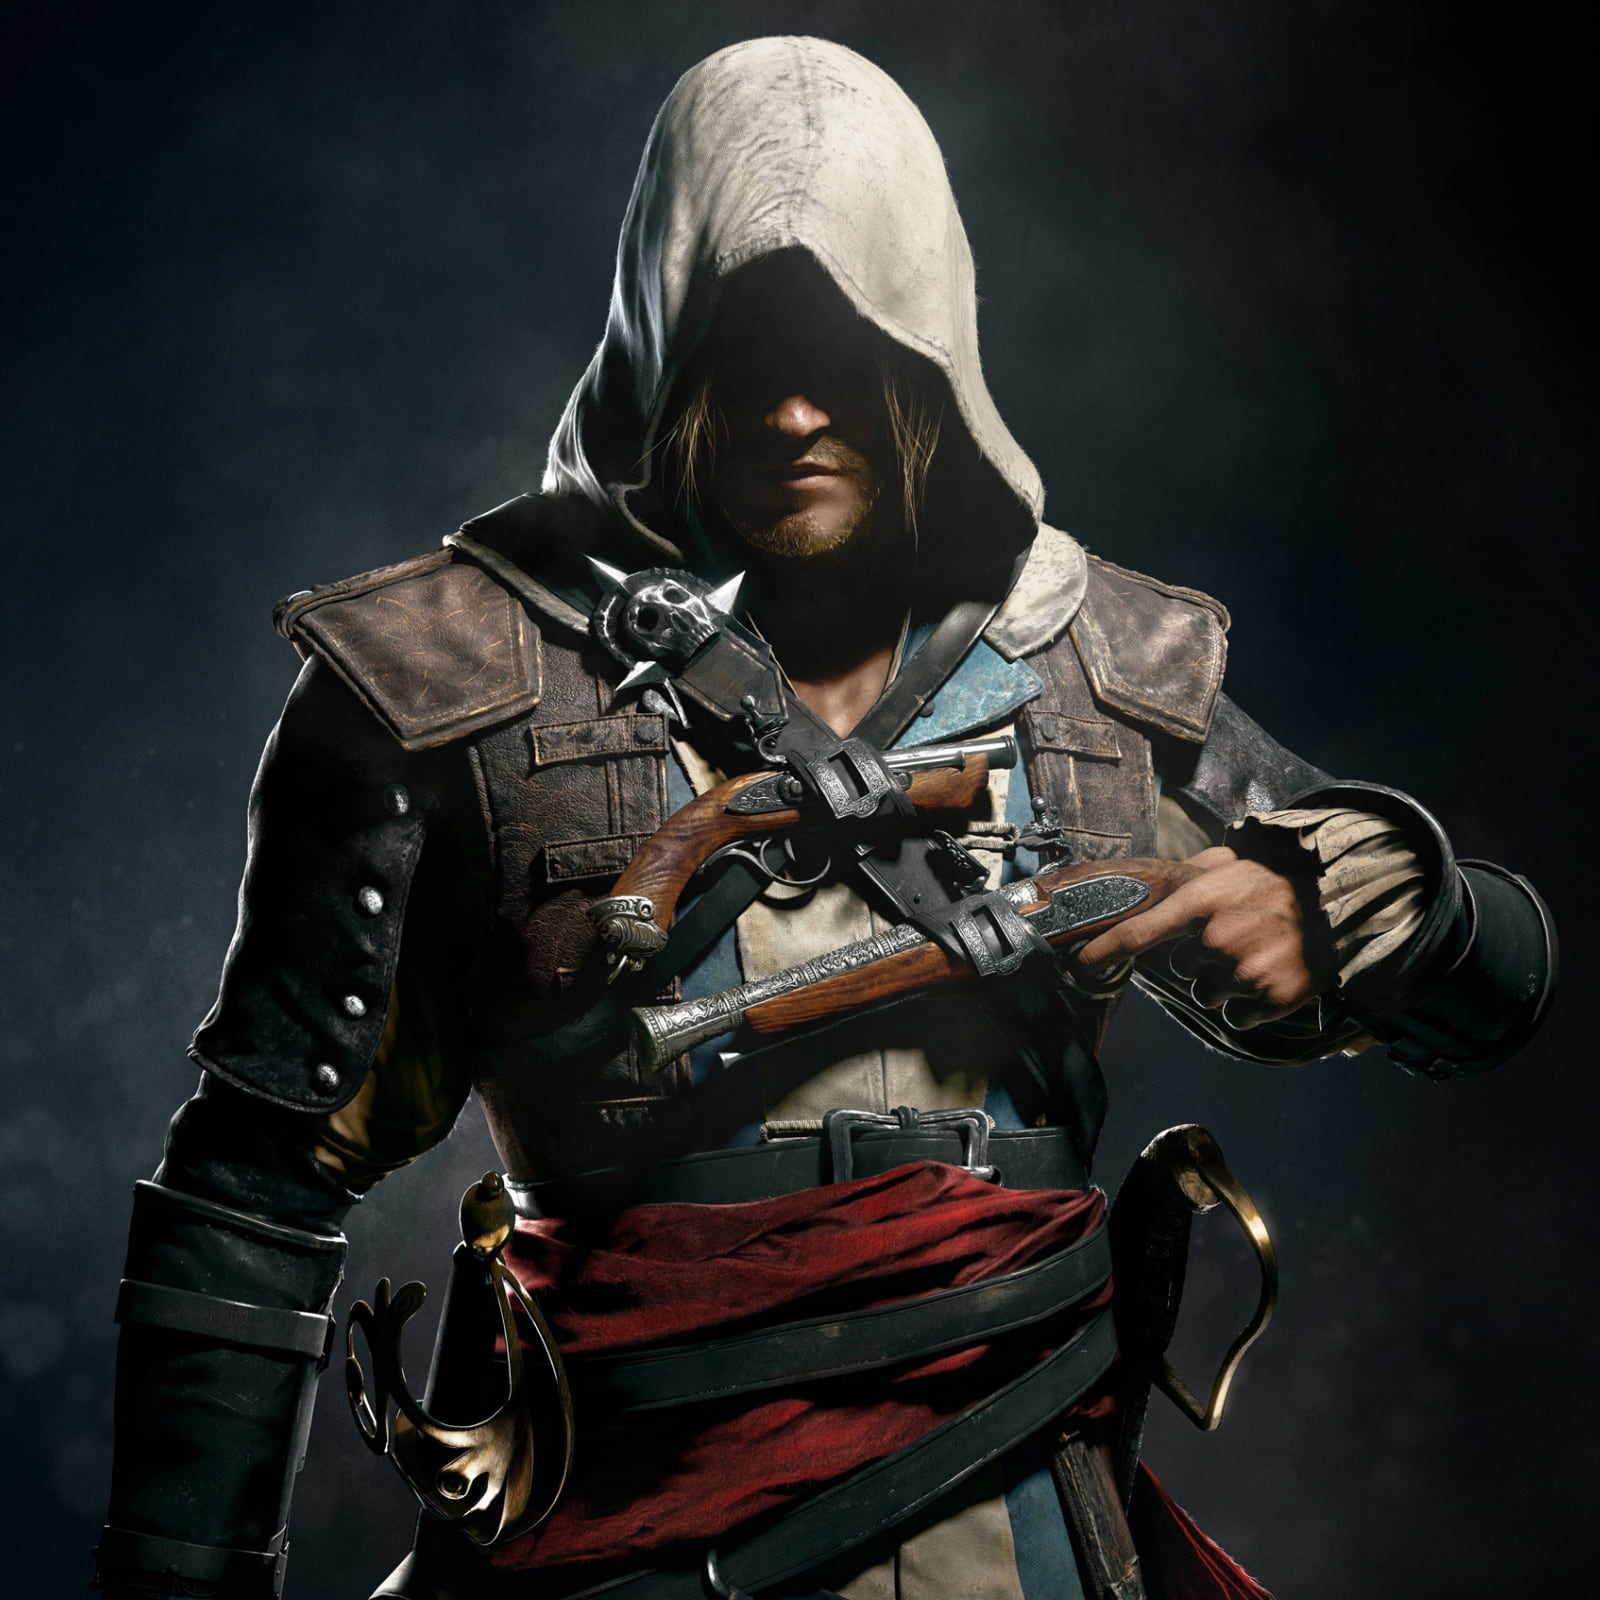 AssassinS Creed Triple Pack Black Flag, Unity, Syndicate - Ragnar Games